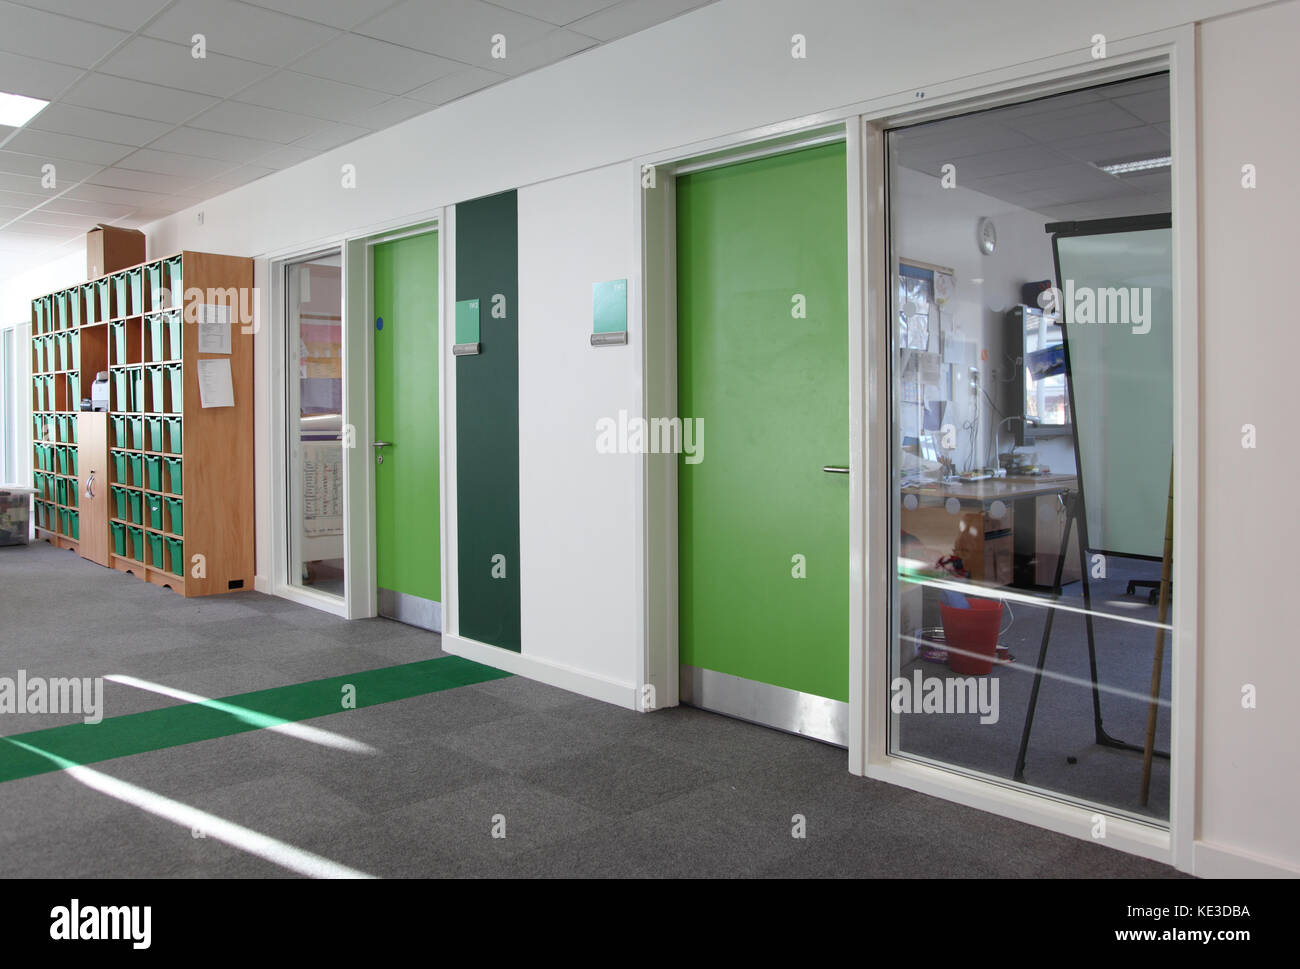 Farbcodierte Klassenzimmer Korridor in einem neuen London Grundschule Akademie. Leer, Türen geschlossen. Stockfoto